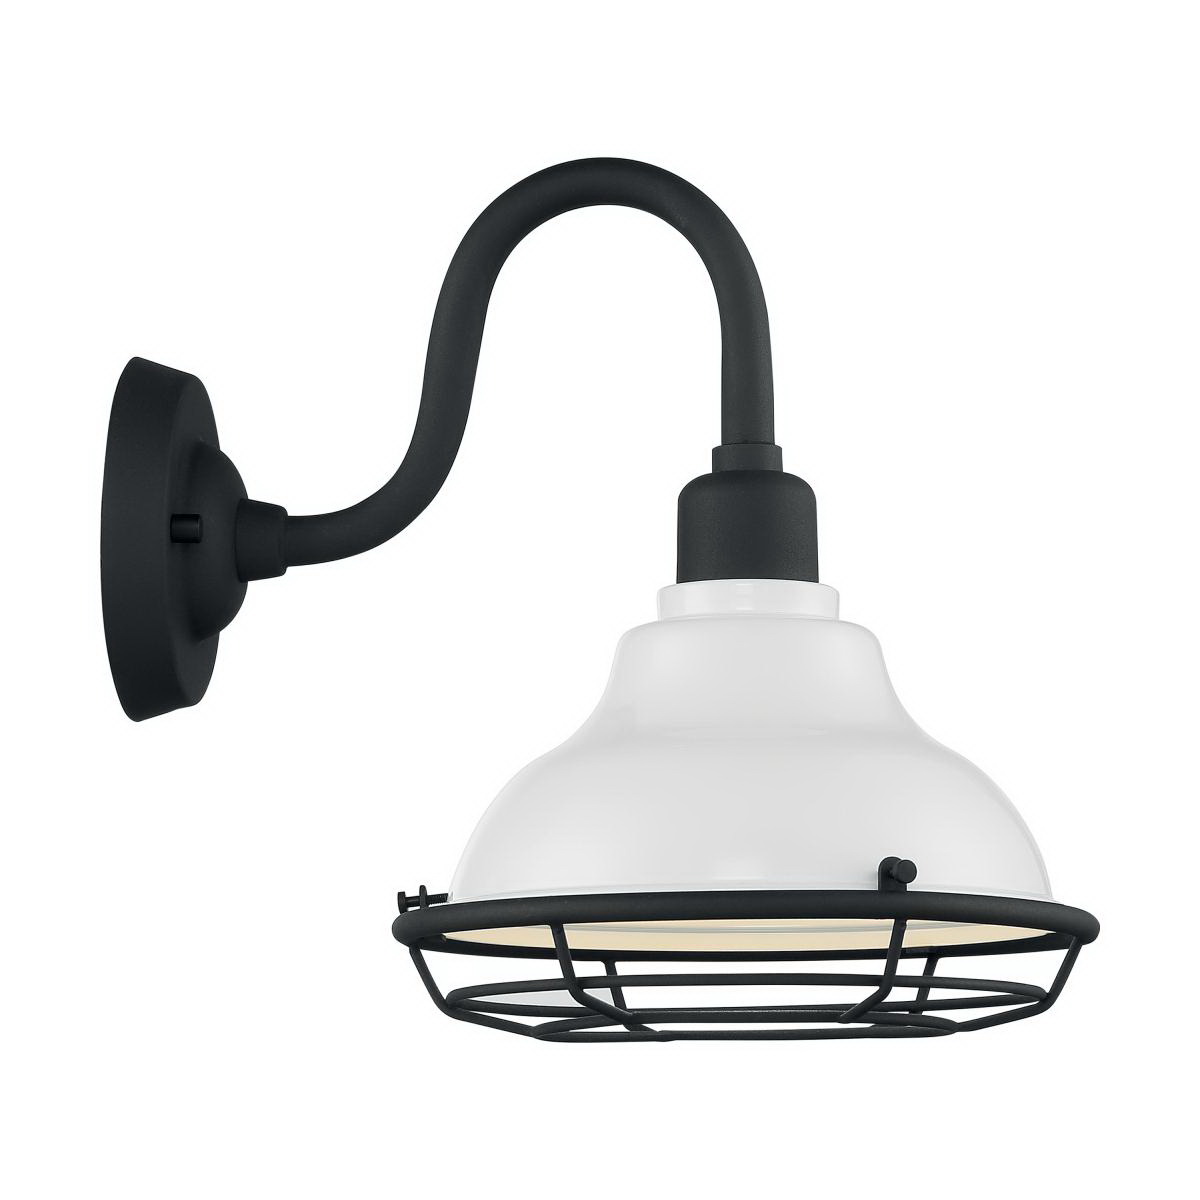 Satco Newbridge 60-7021 Sconce, 120 V, Incandescent Lamp, Steel Fixture, Gloss White/Textured Black Fixture - 3